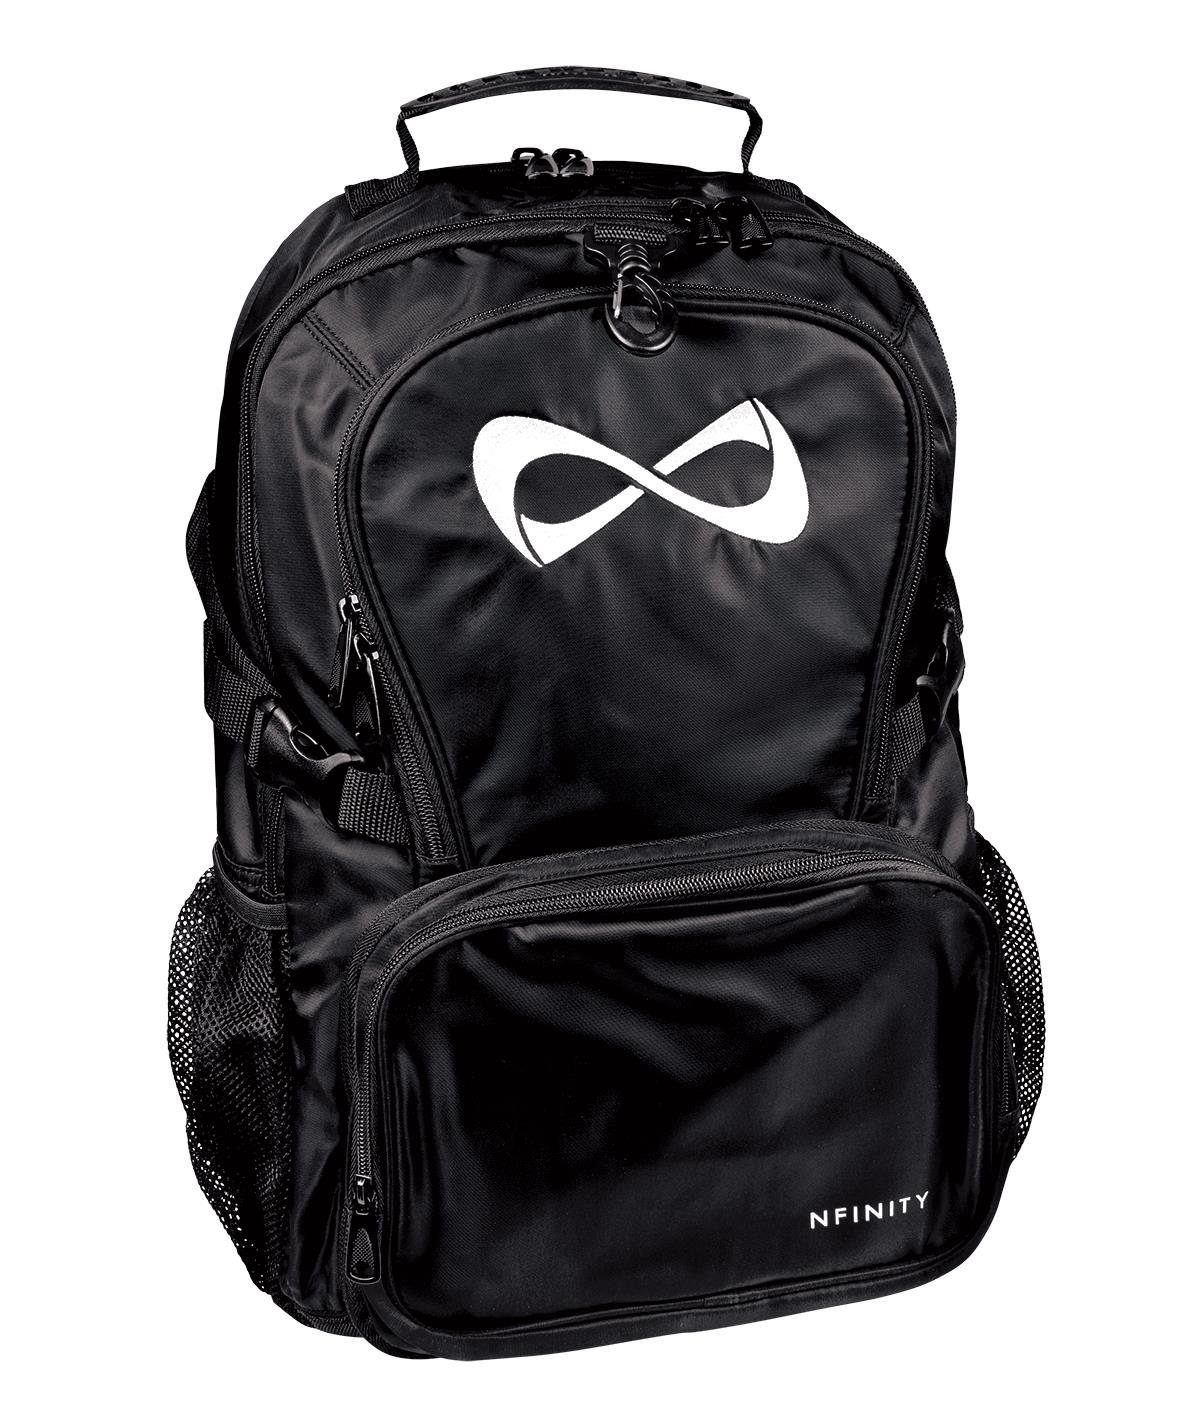 Nfinity Classic Backpack - Cheer Bags | Omni Cheer